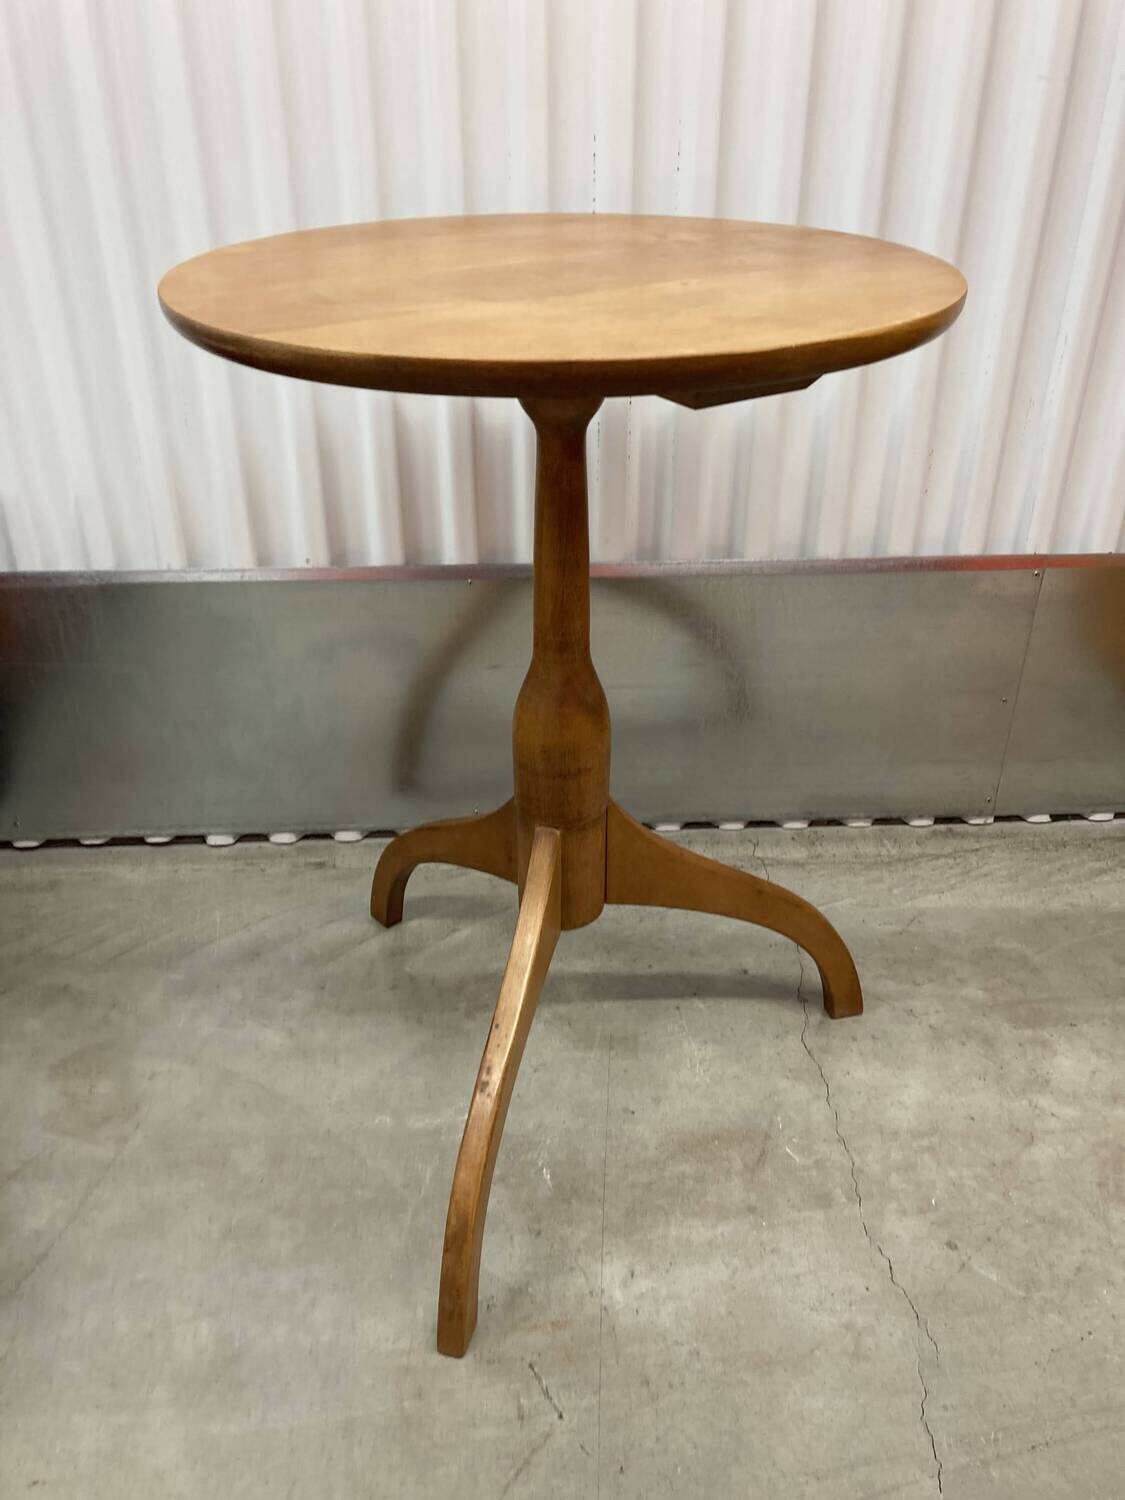 18" Round Pedestal Table, maple #2213